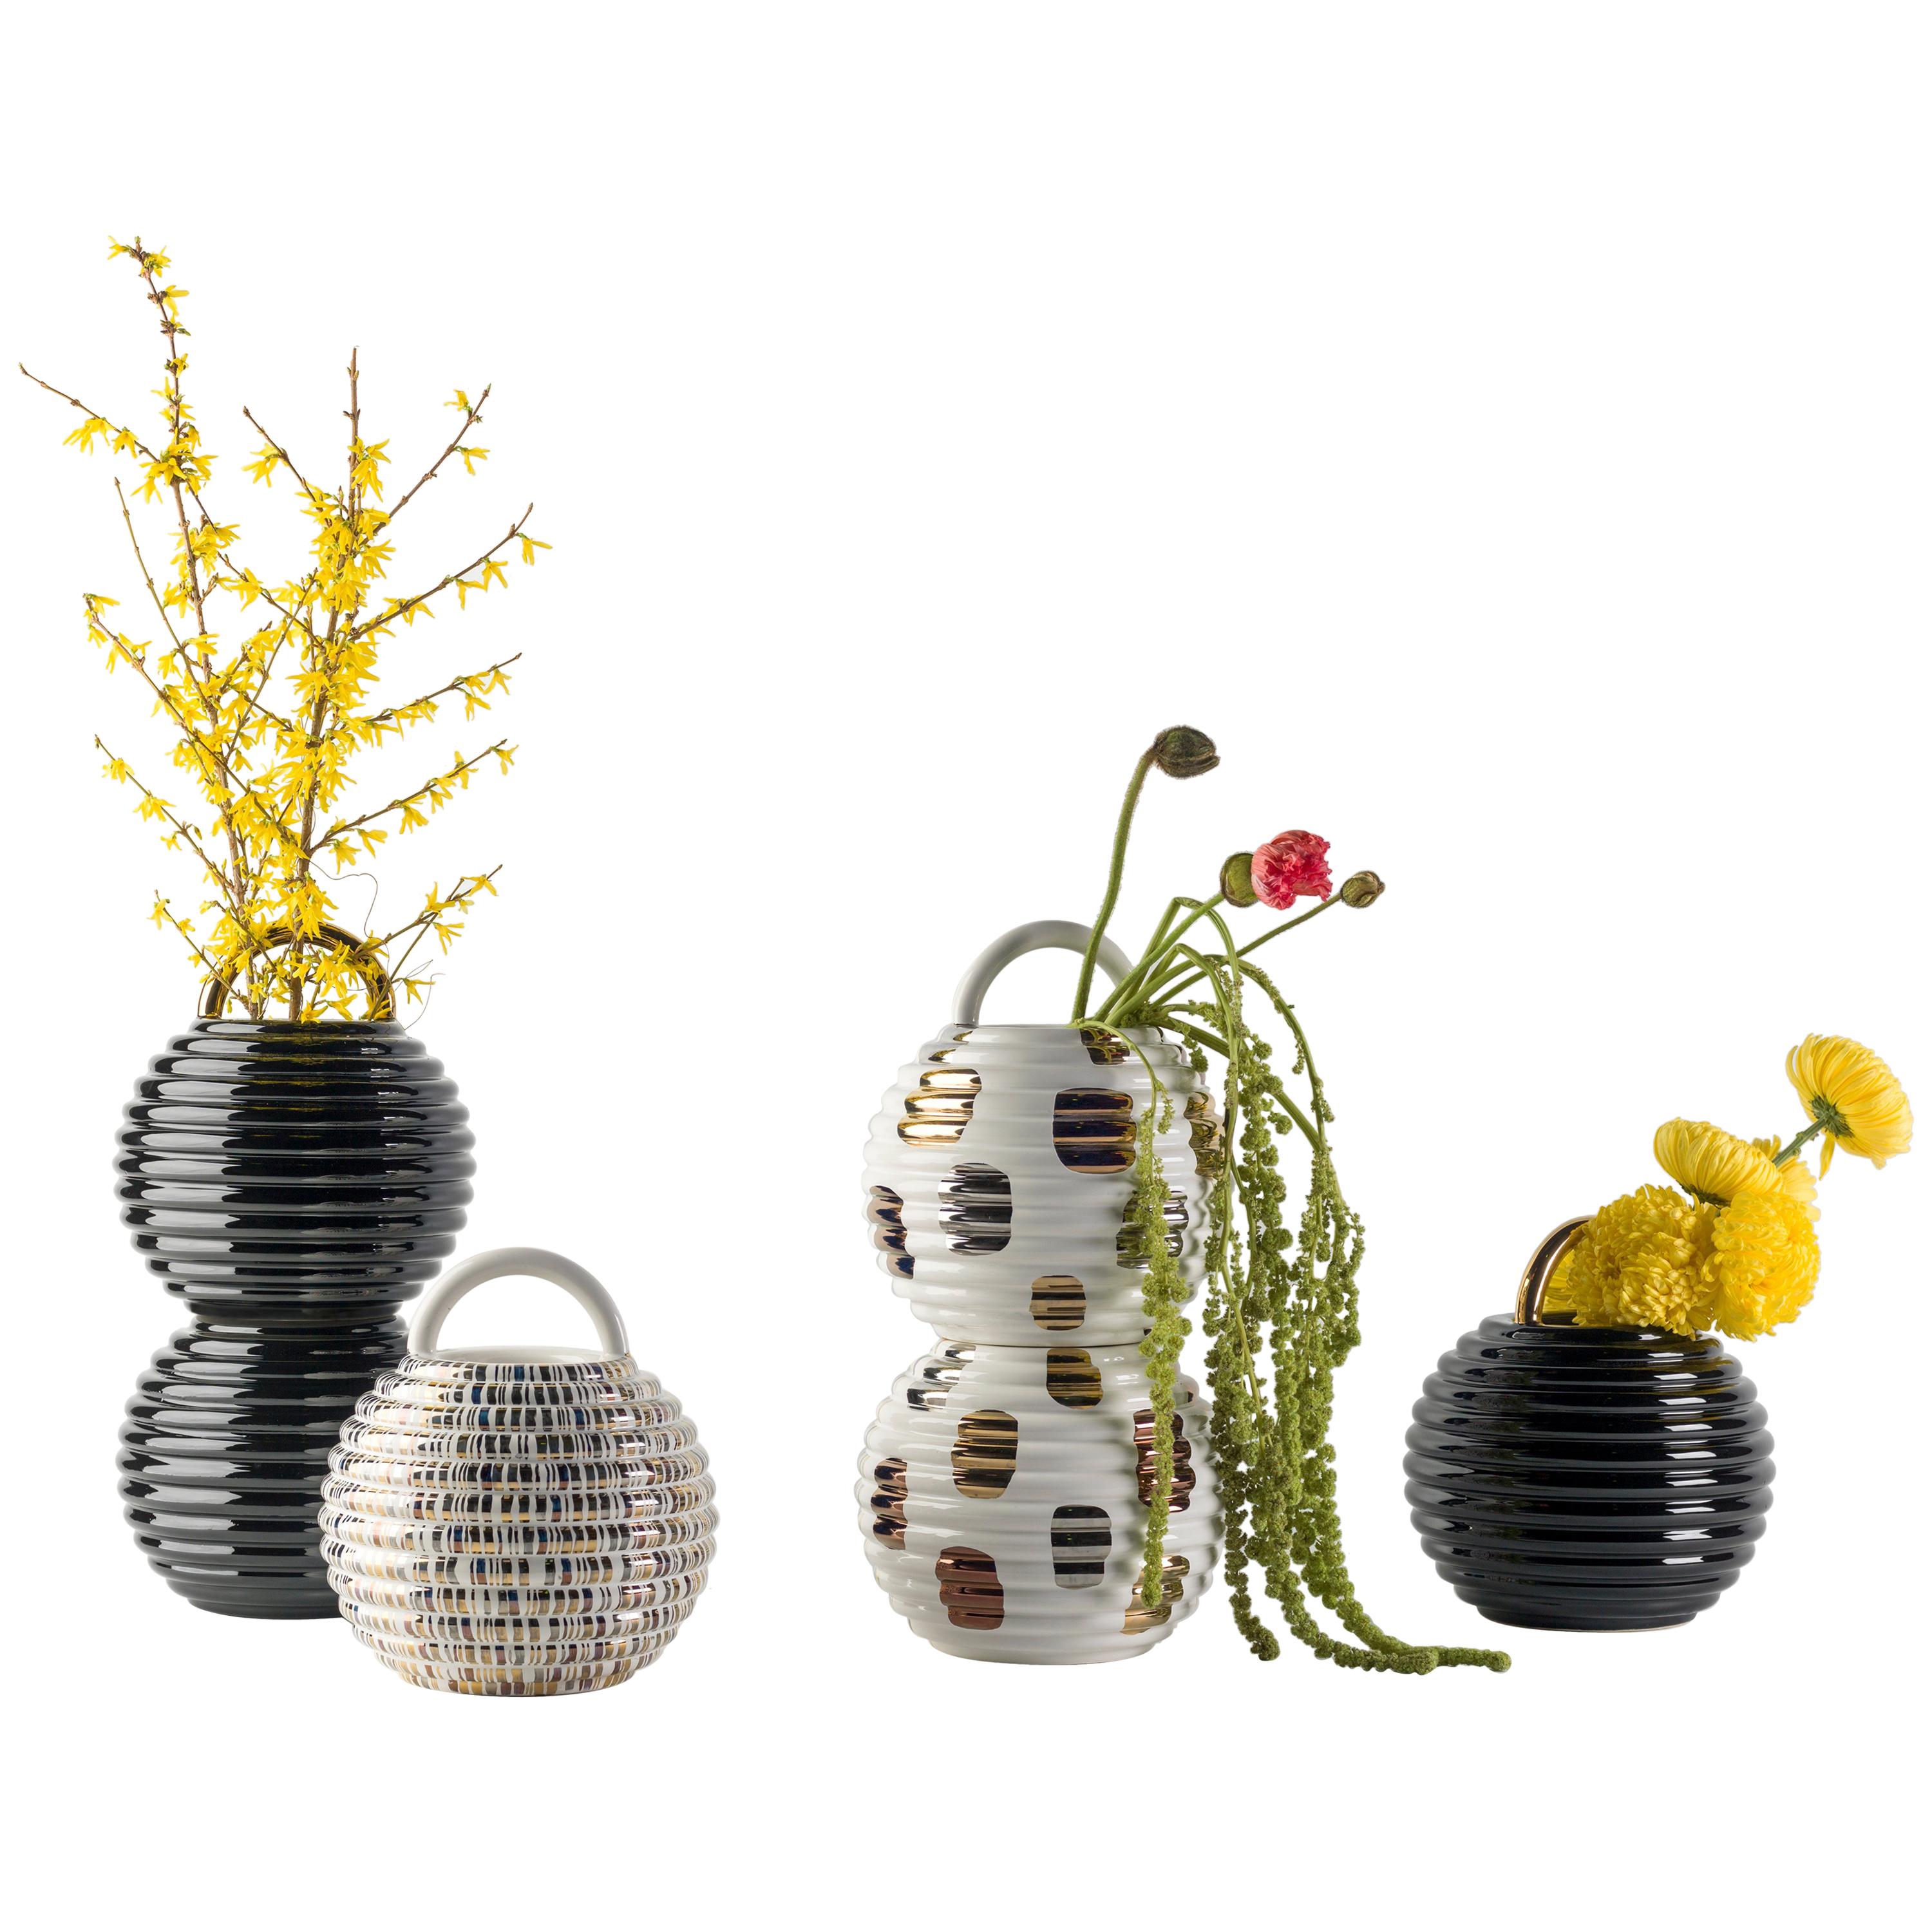 Grasso Vases by Stephen Burks